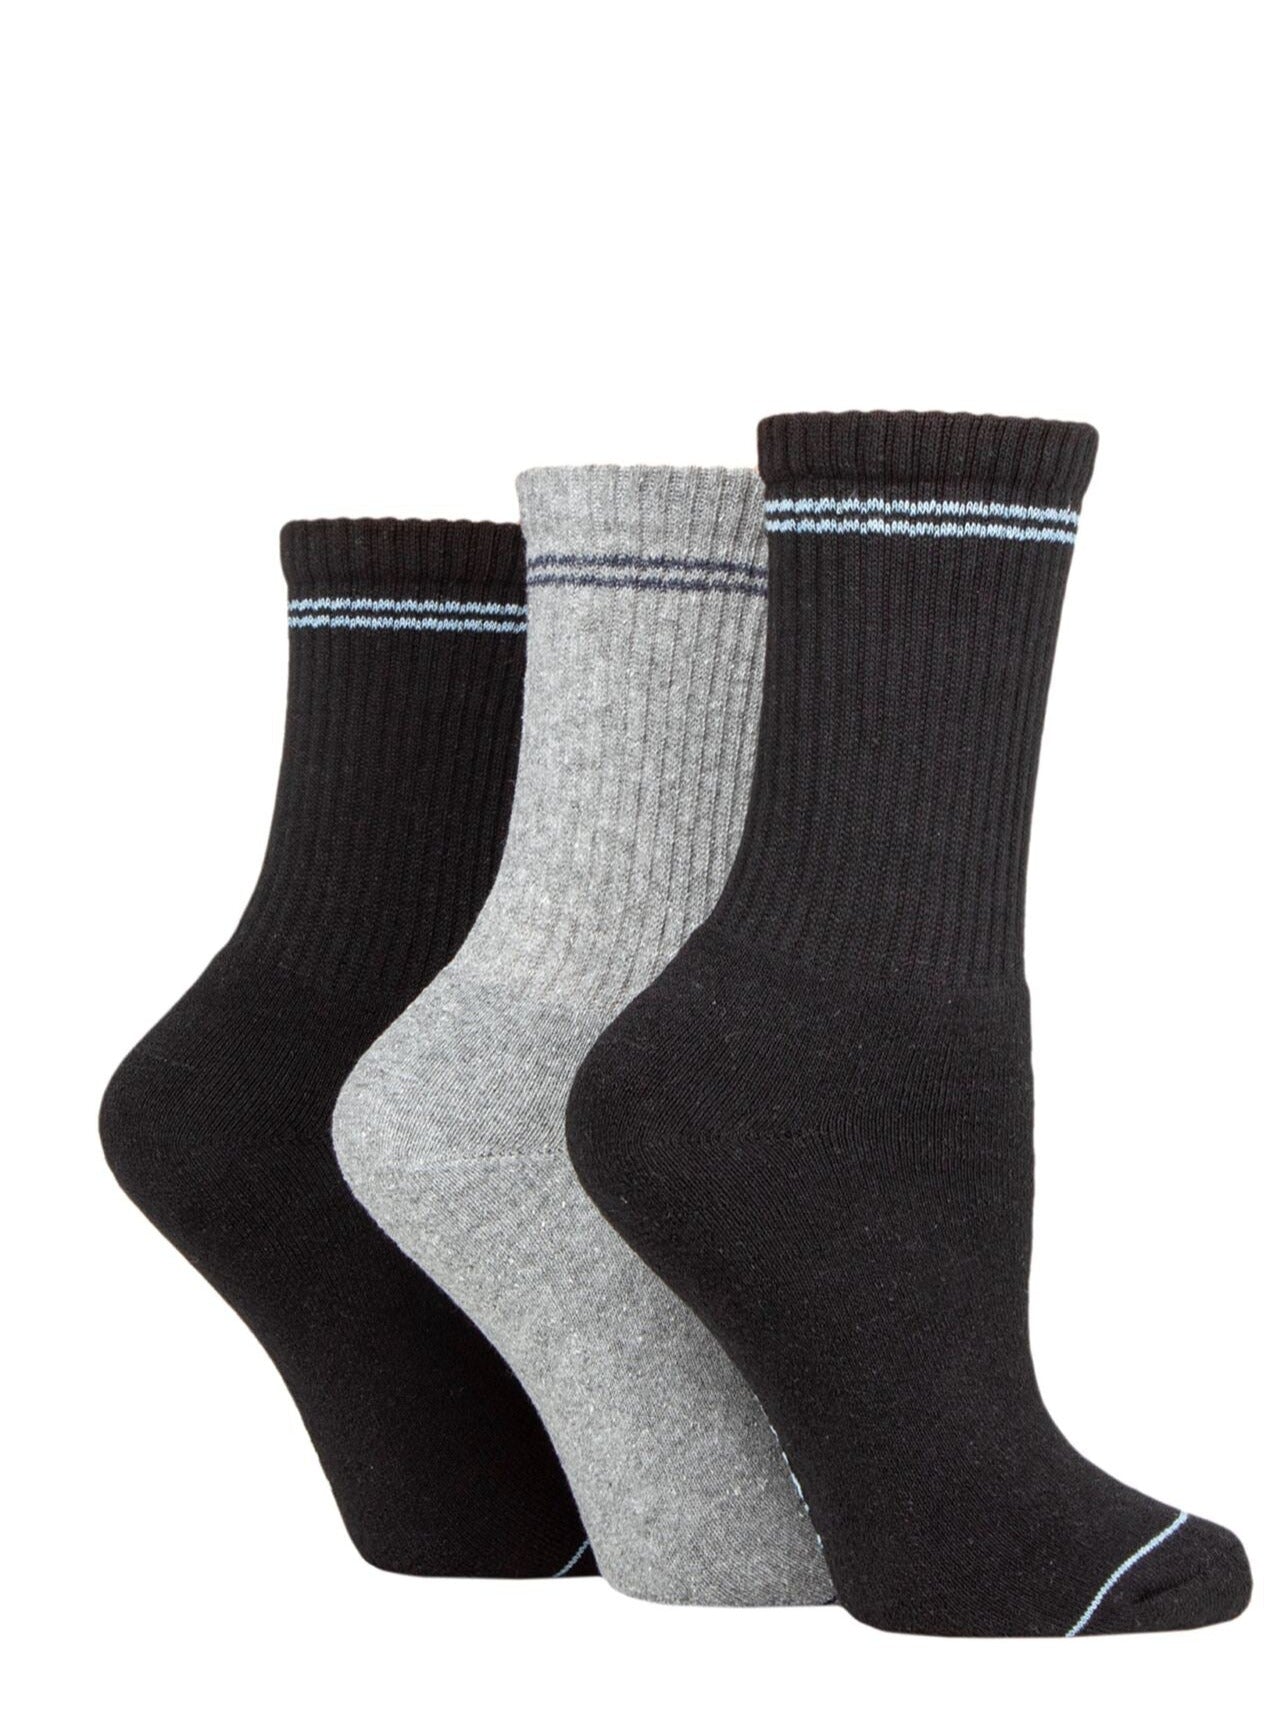 TORE 3PK 100% Recycled Cotton Fashion Sports Socks - Women's